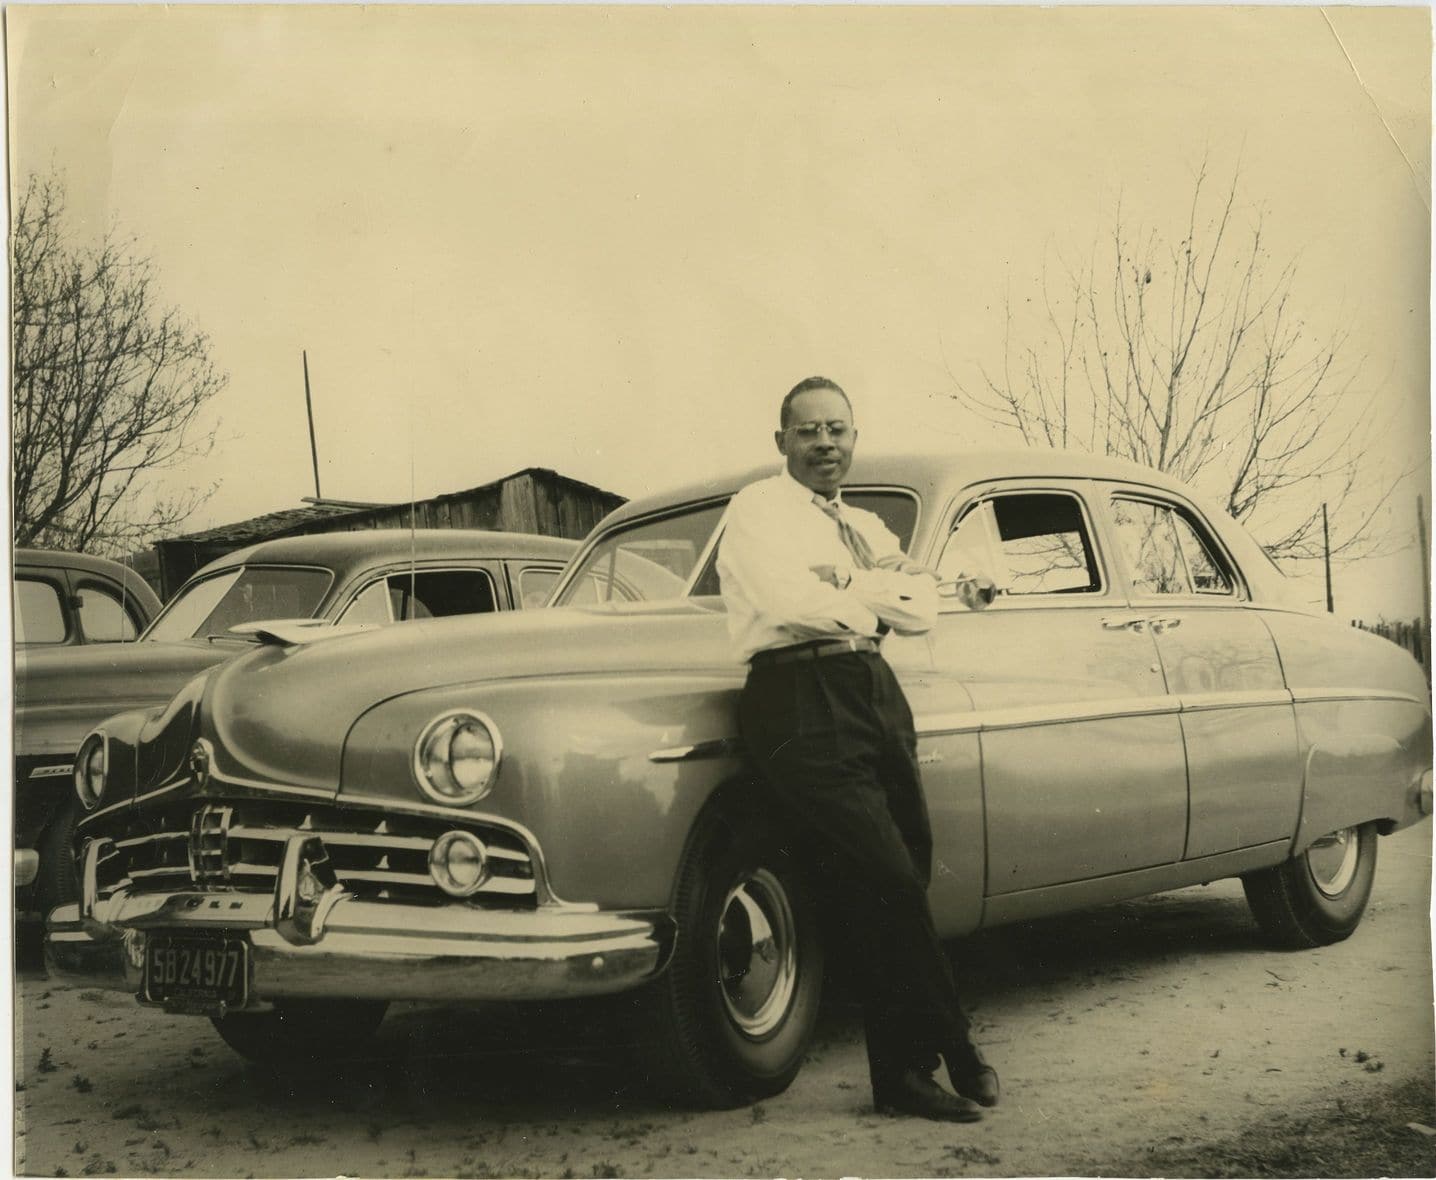 Historic image of William Fletcher leaning against car